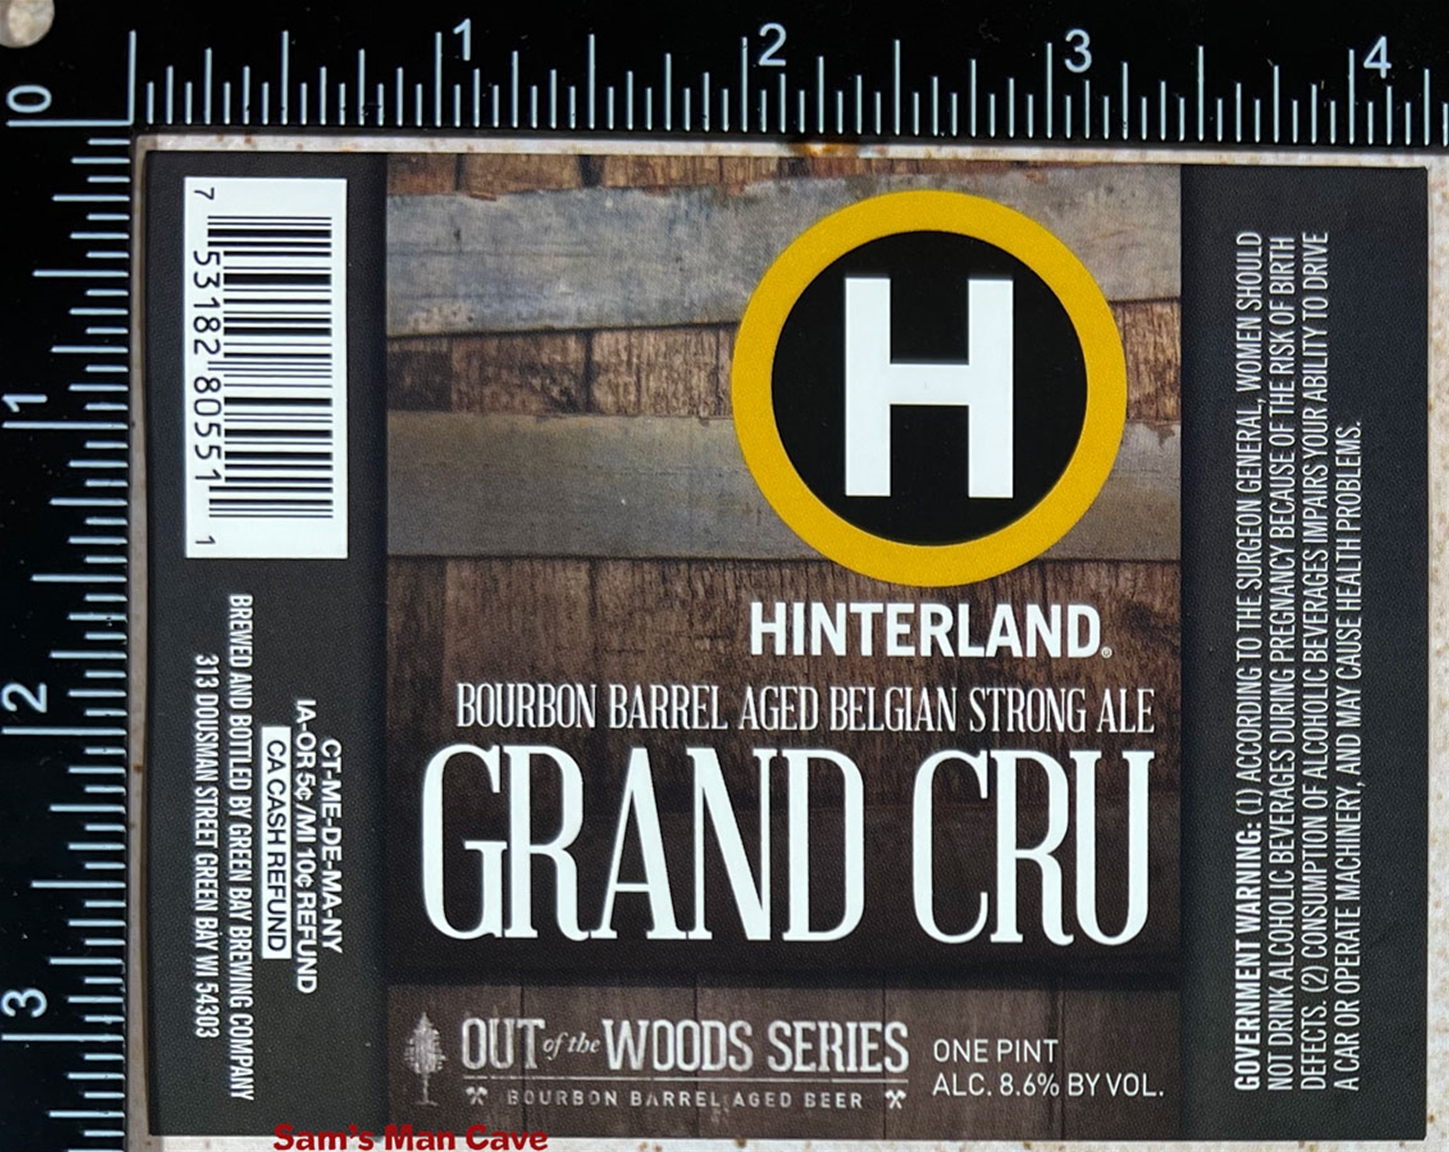 Hinterland Grand Cru Label